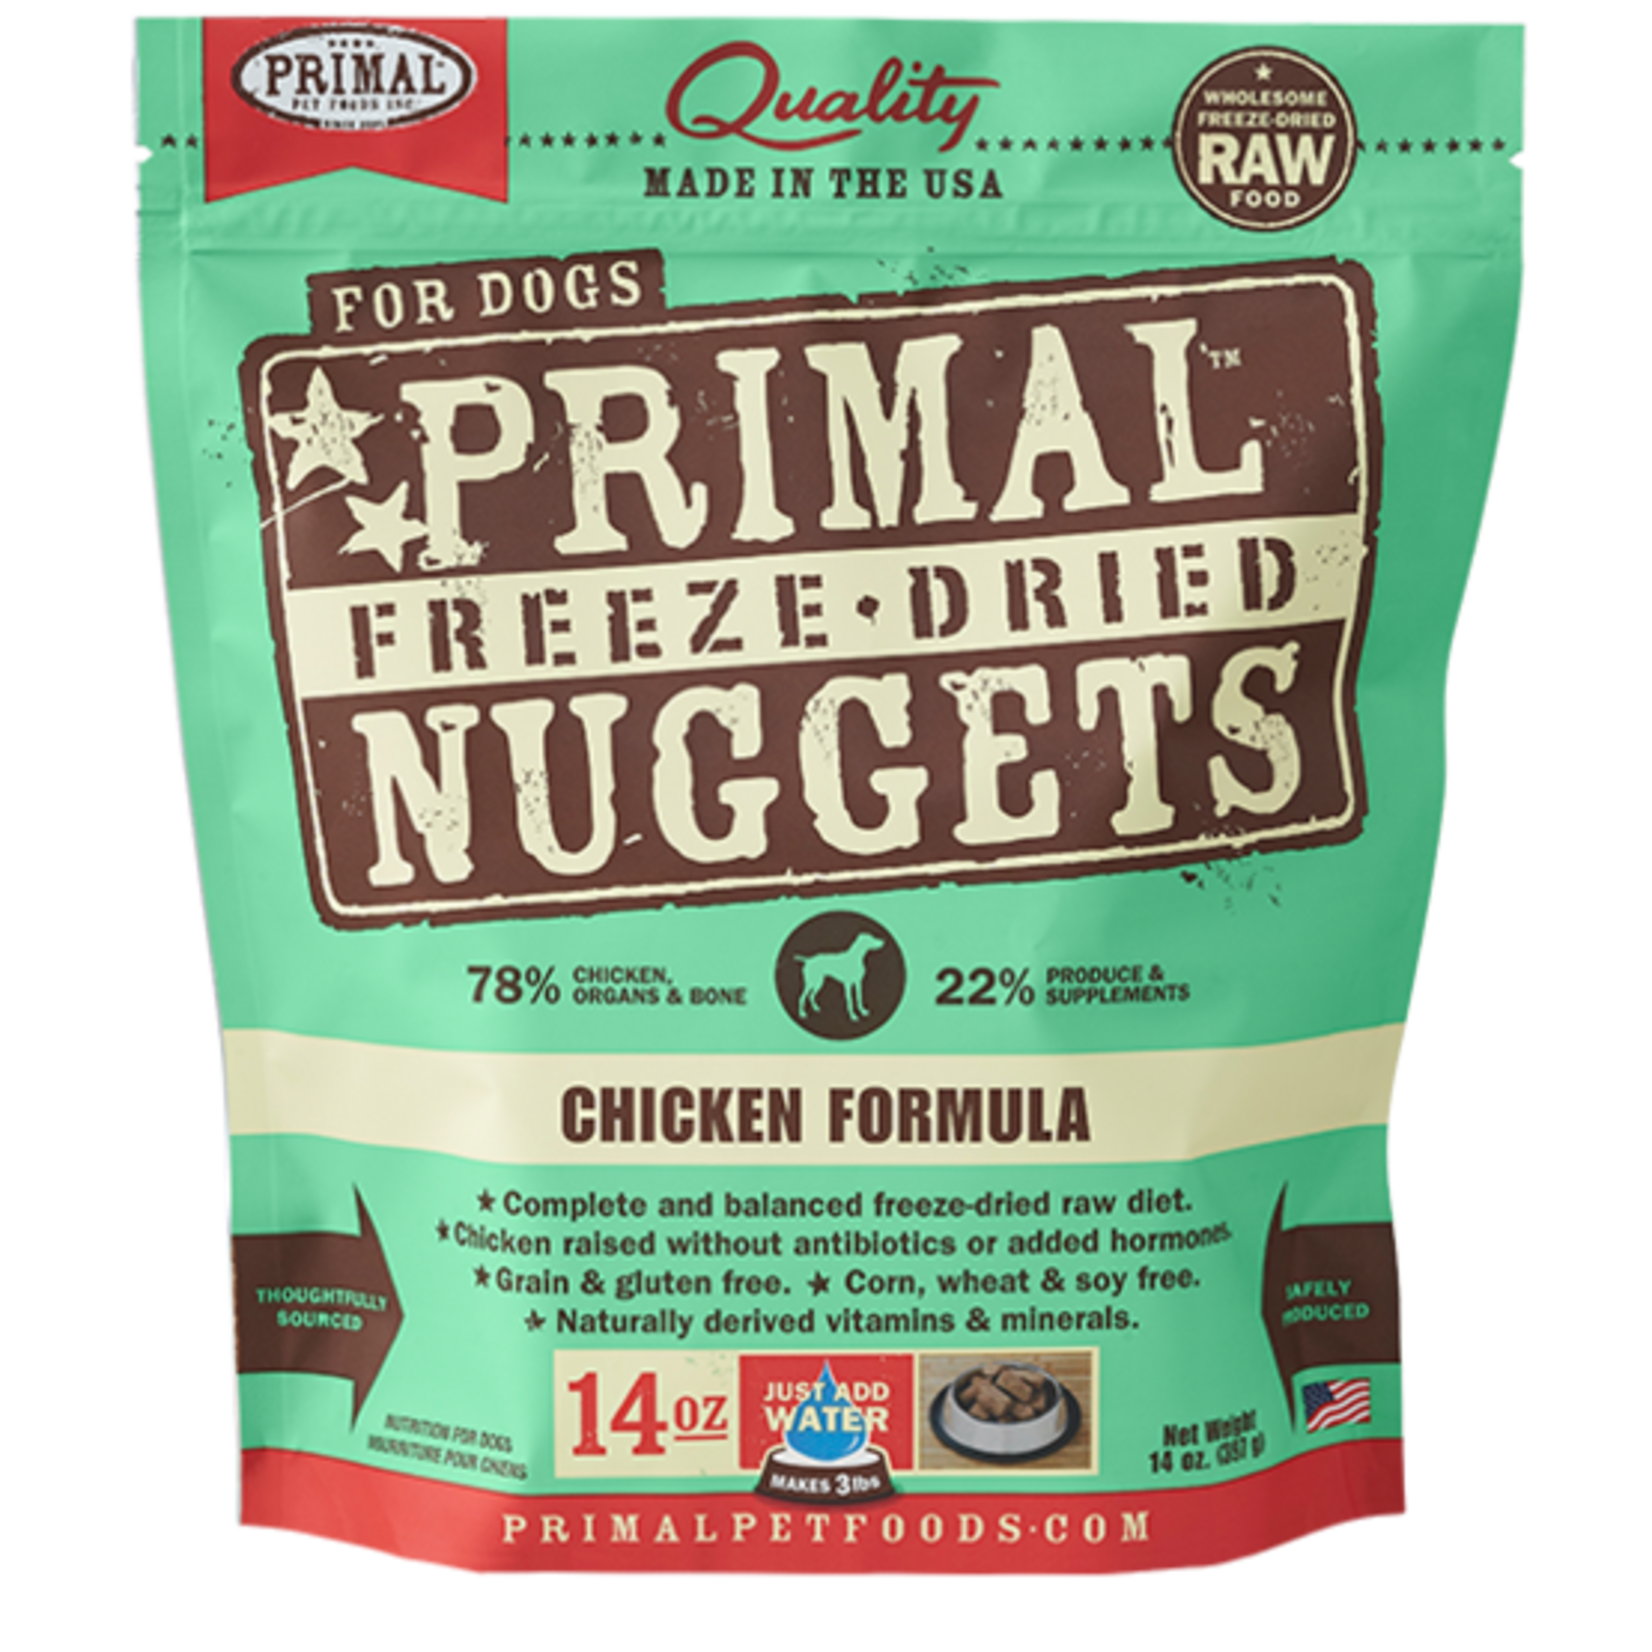 PRIMAL Primal Freeze-dried Chicken